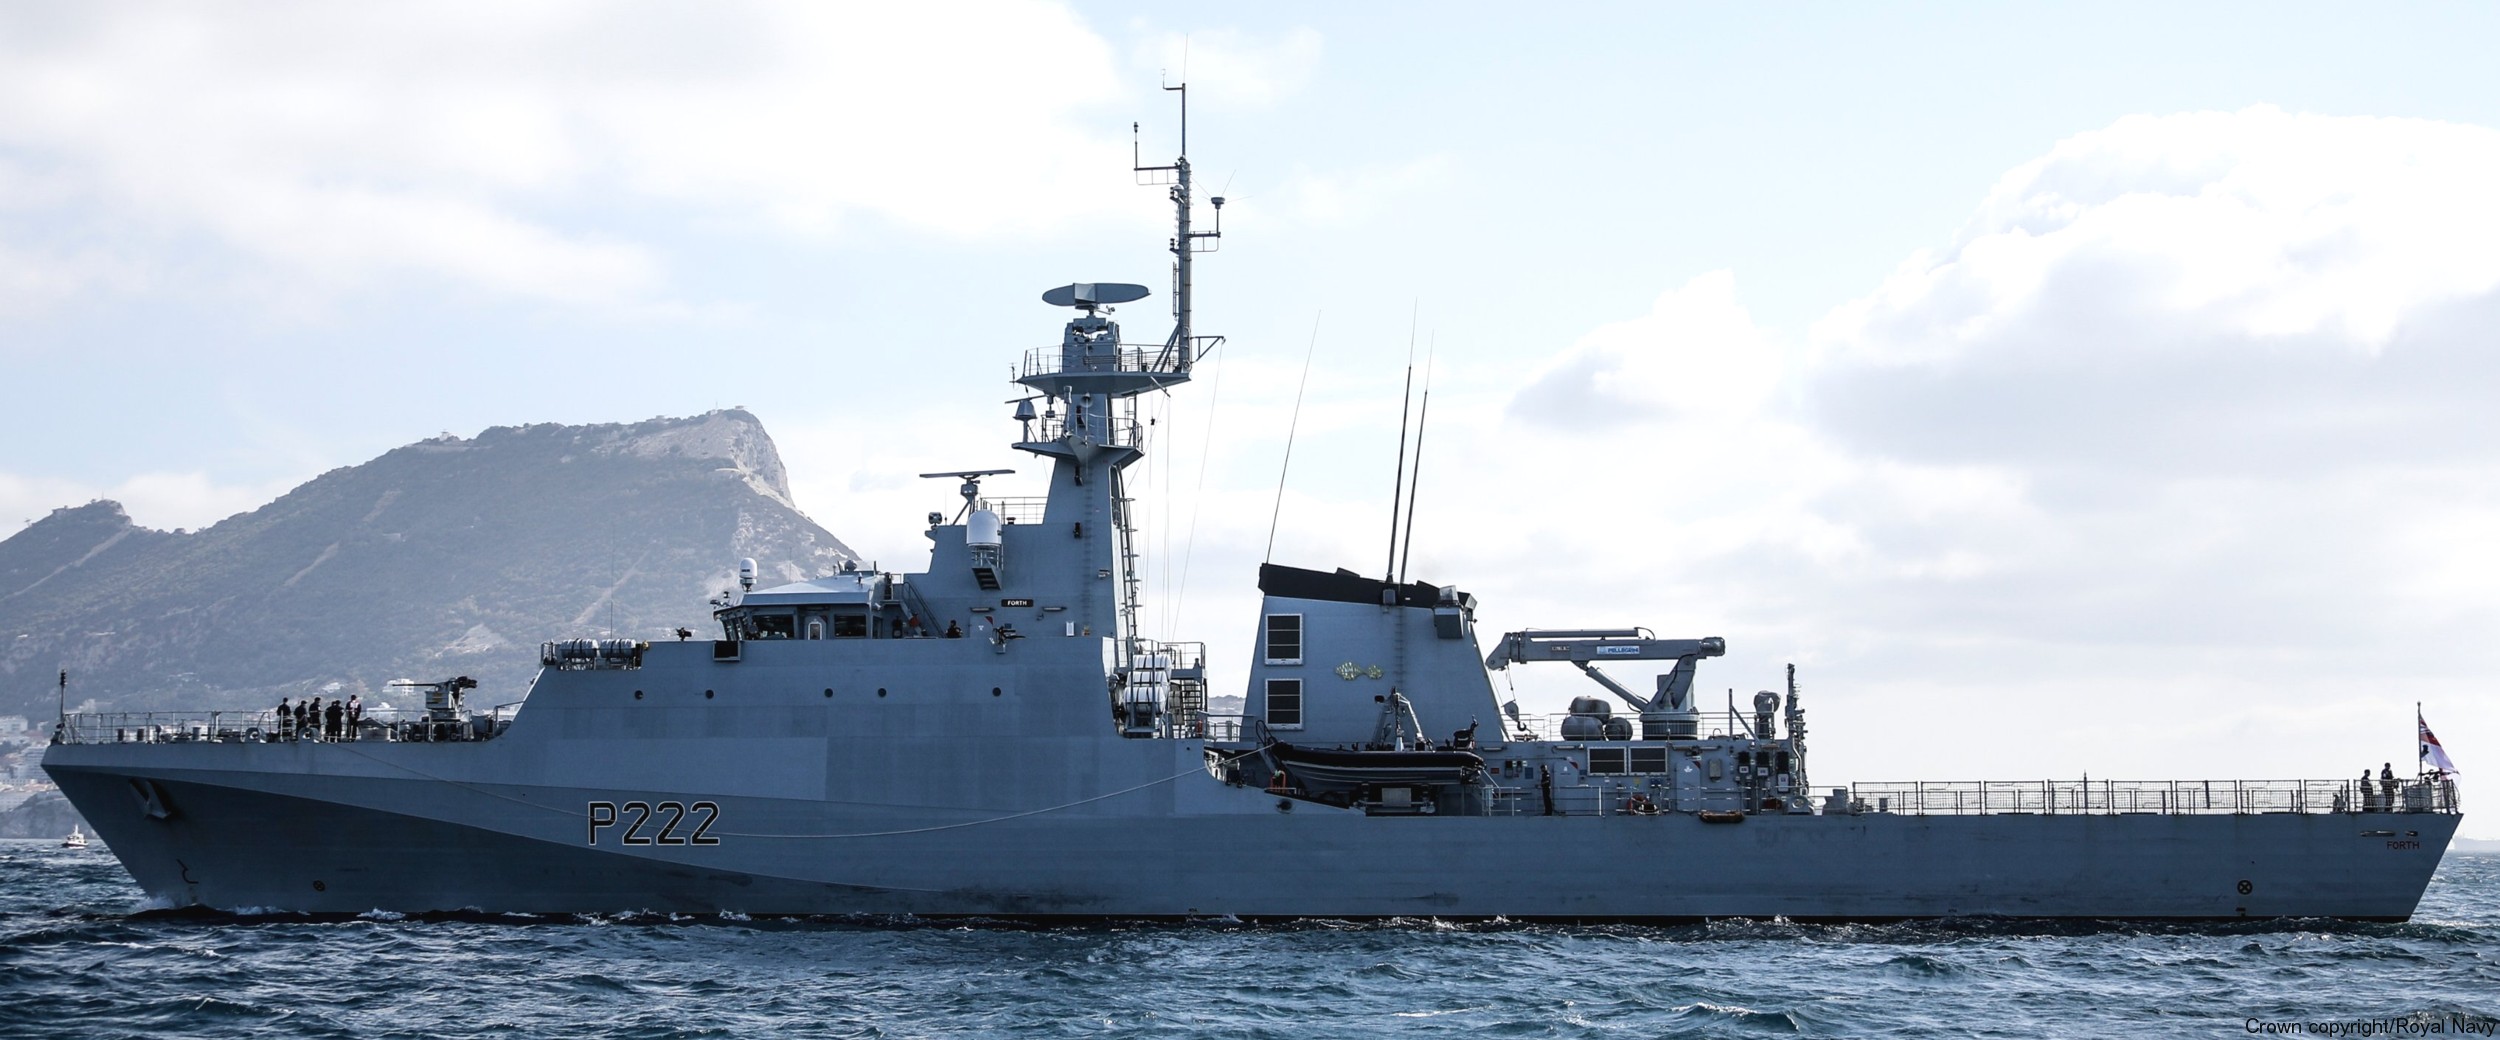 p222 hms forth river class offshore patrol vessel opv royal navy 58 gibraltar